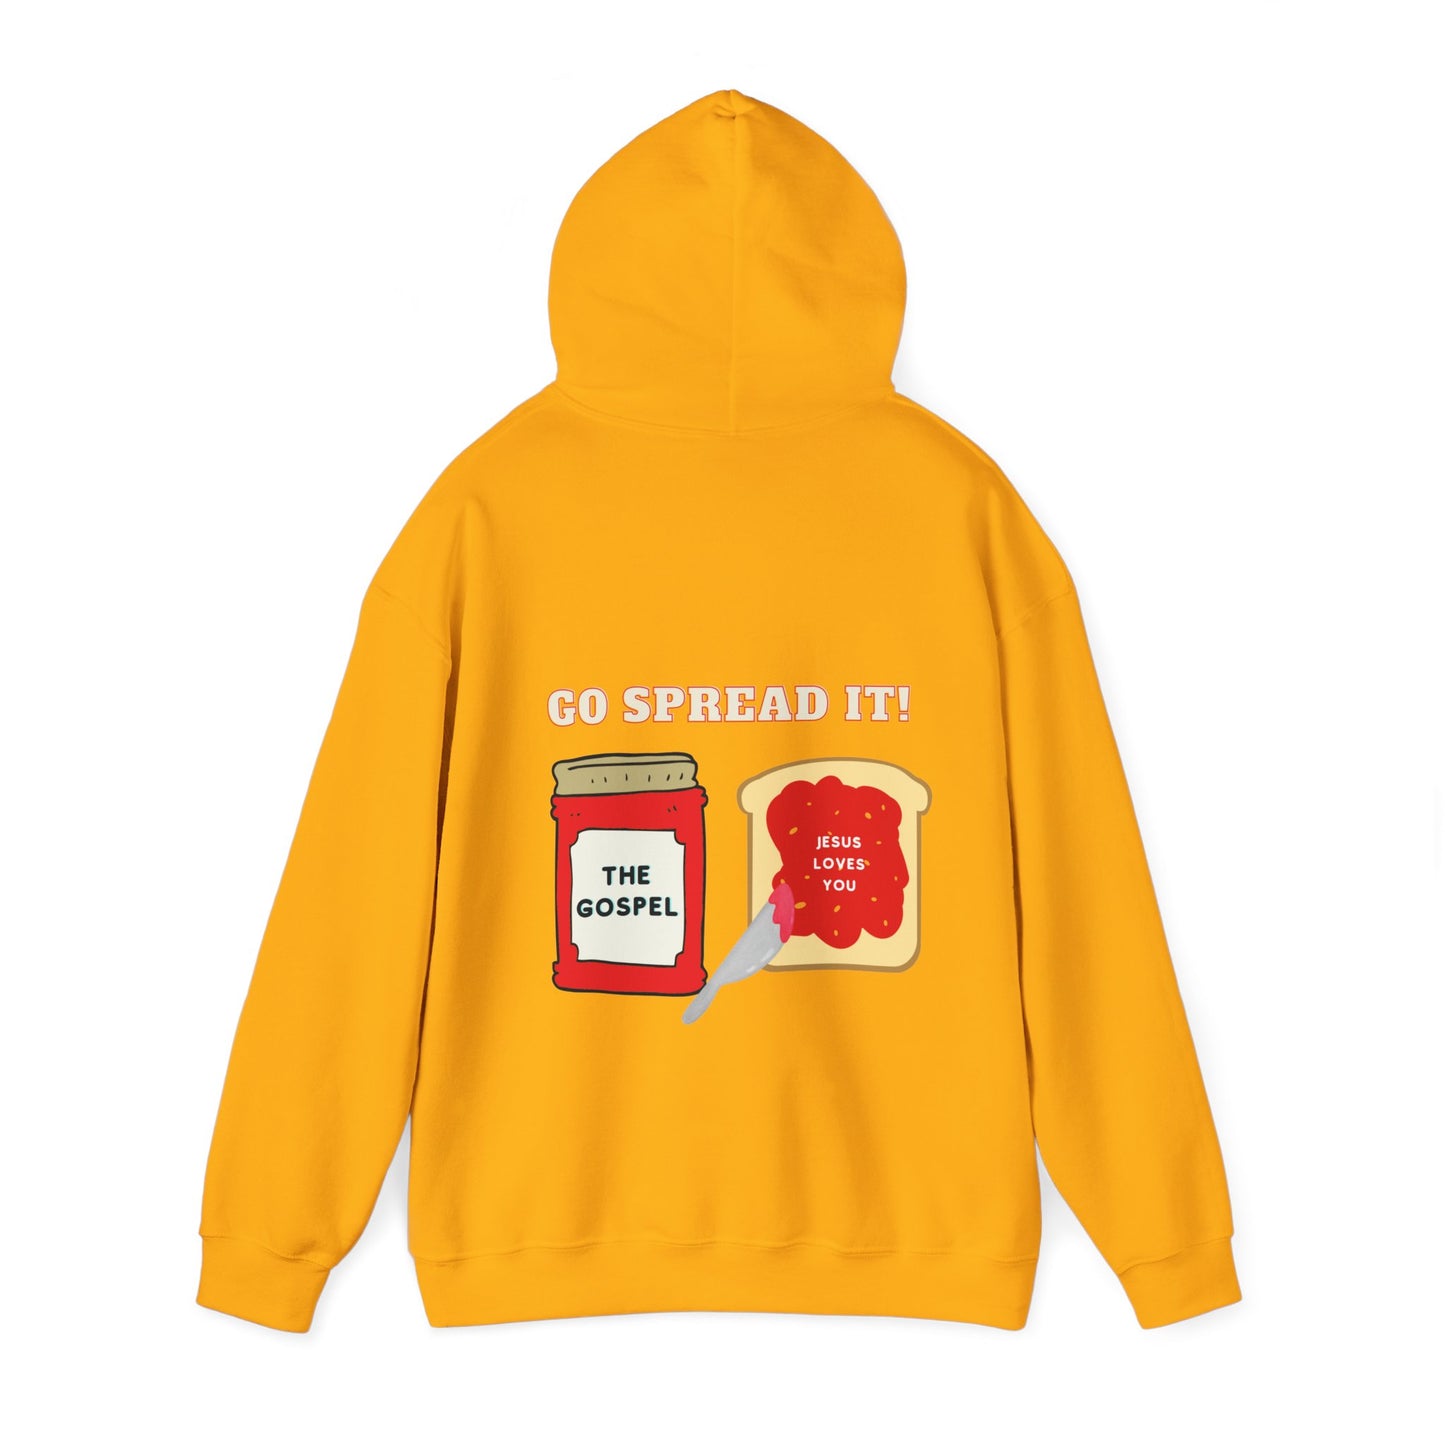 Spread the Gospel Unisex Hooded Sweatshirt